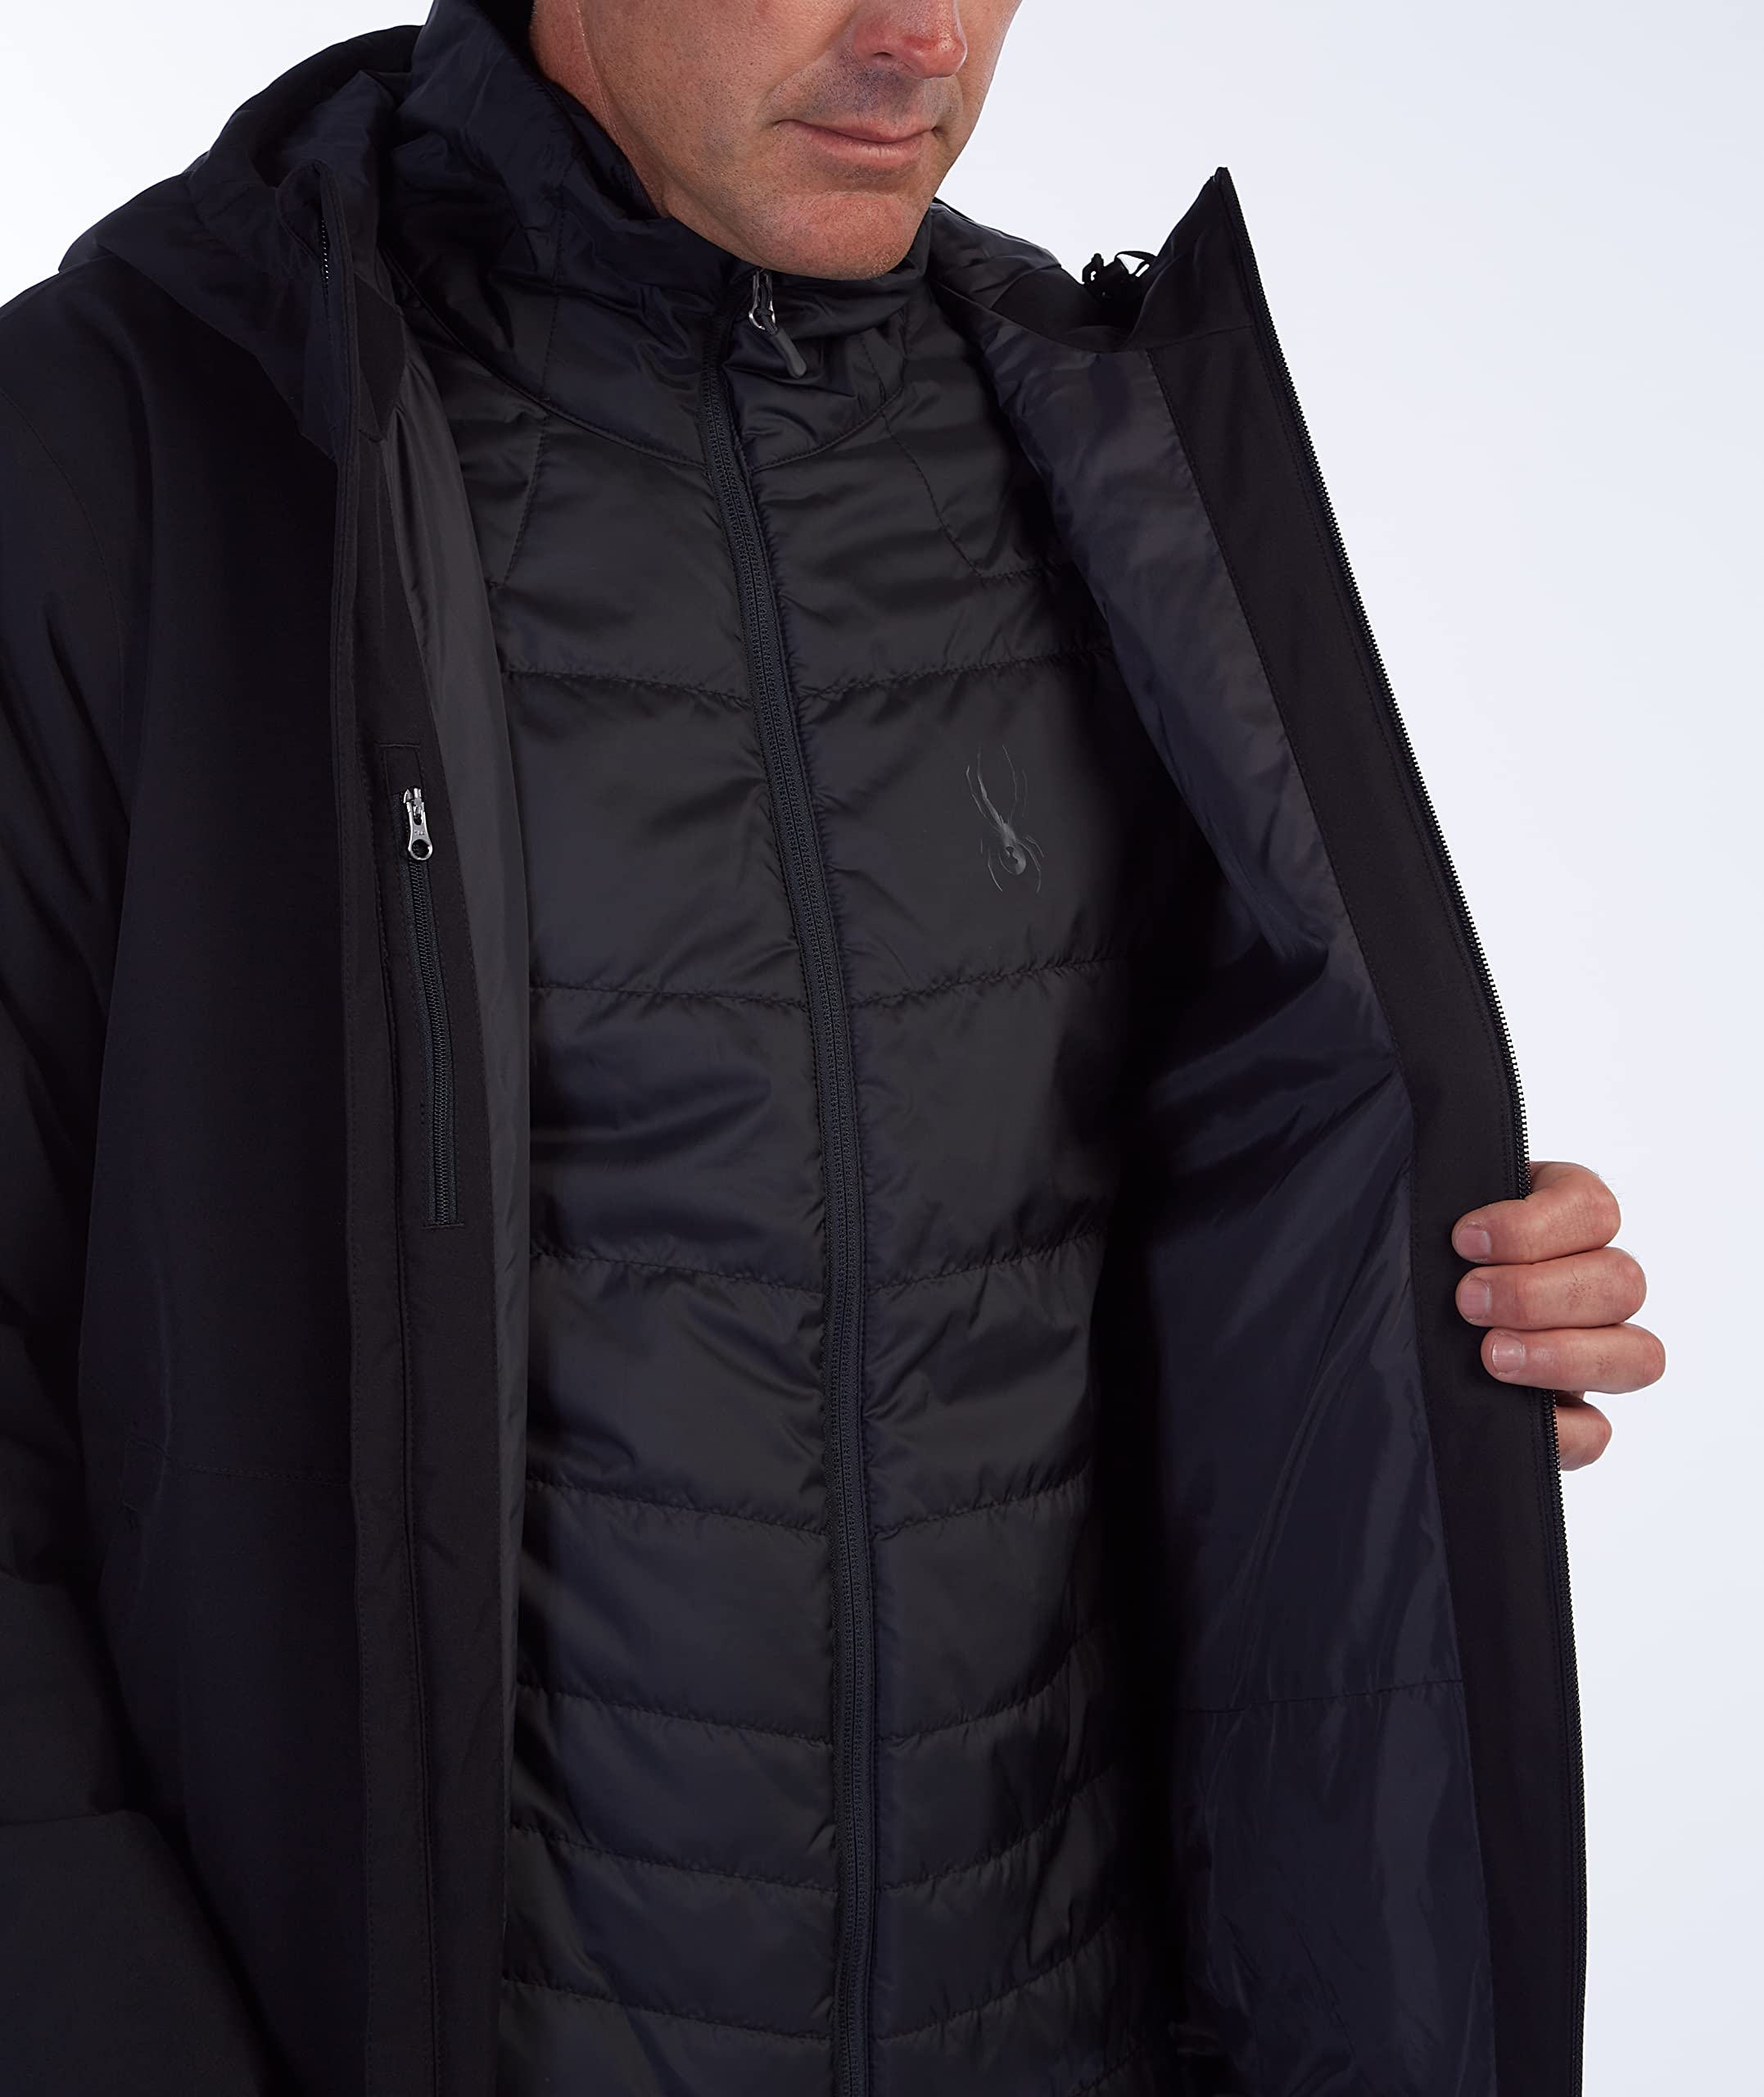 Spyder Mens Grand 3 in 1 Insulated Ski jacket